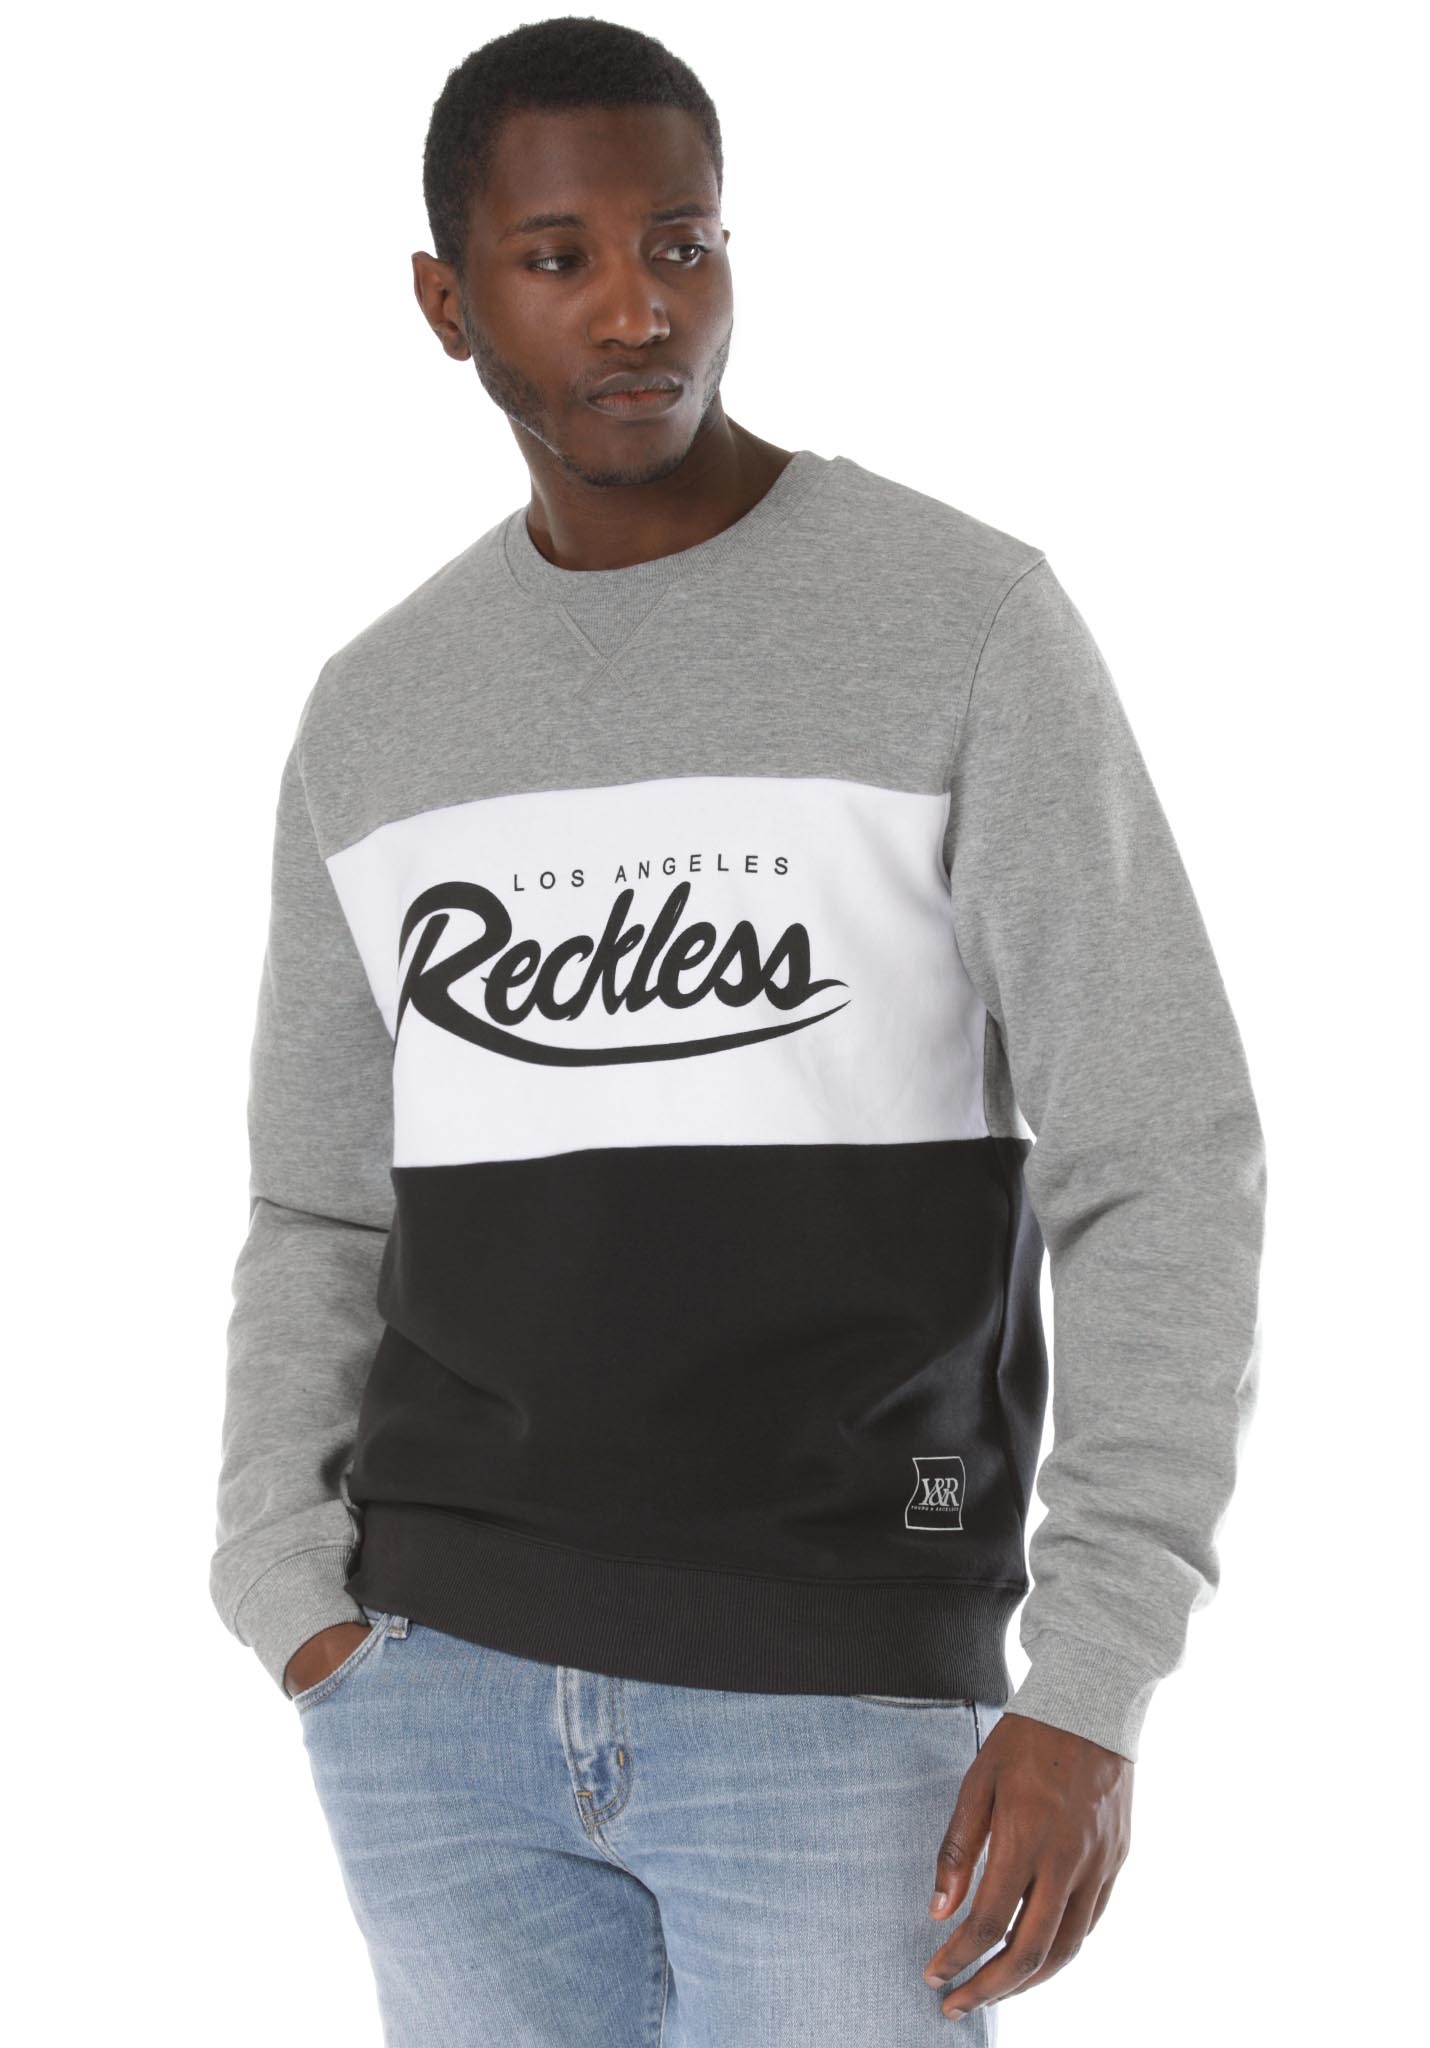 Young and Reckless Opulent Crew Sweatshirt black M